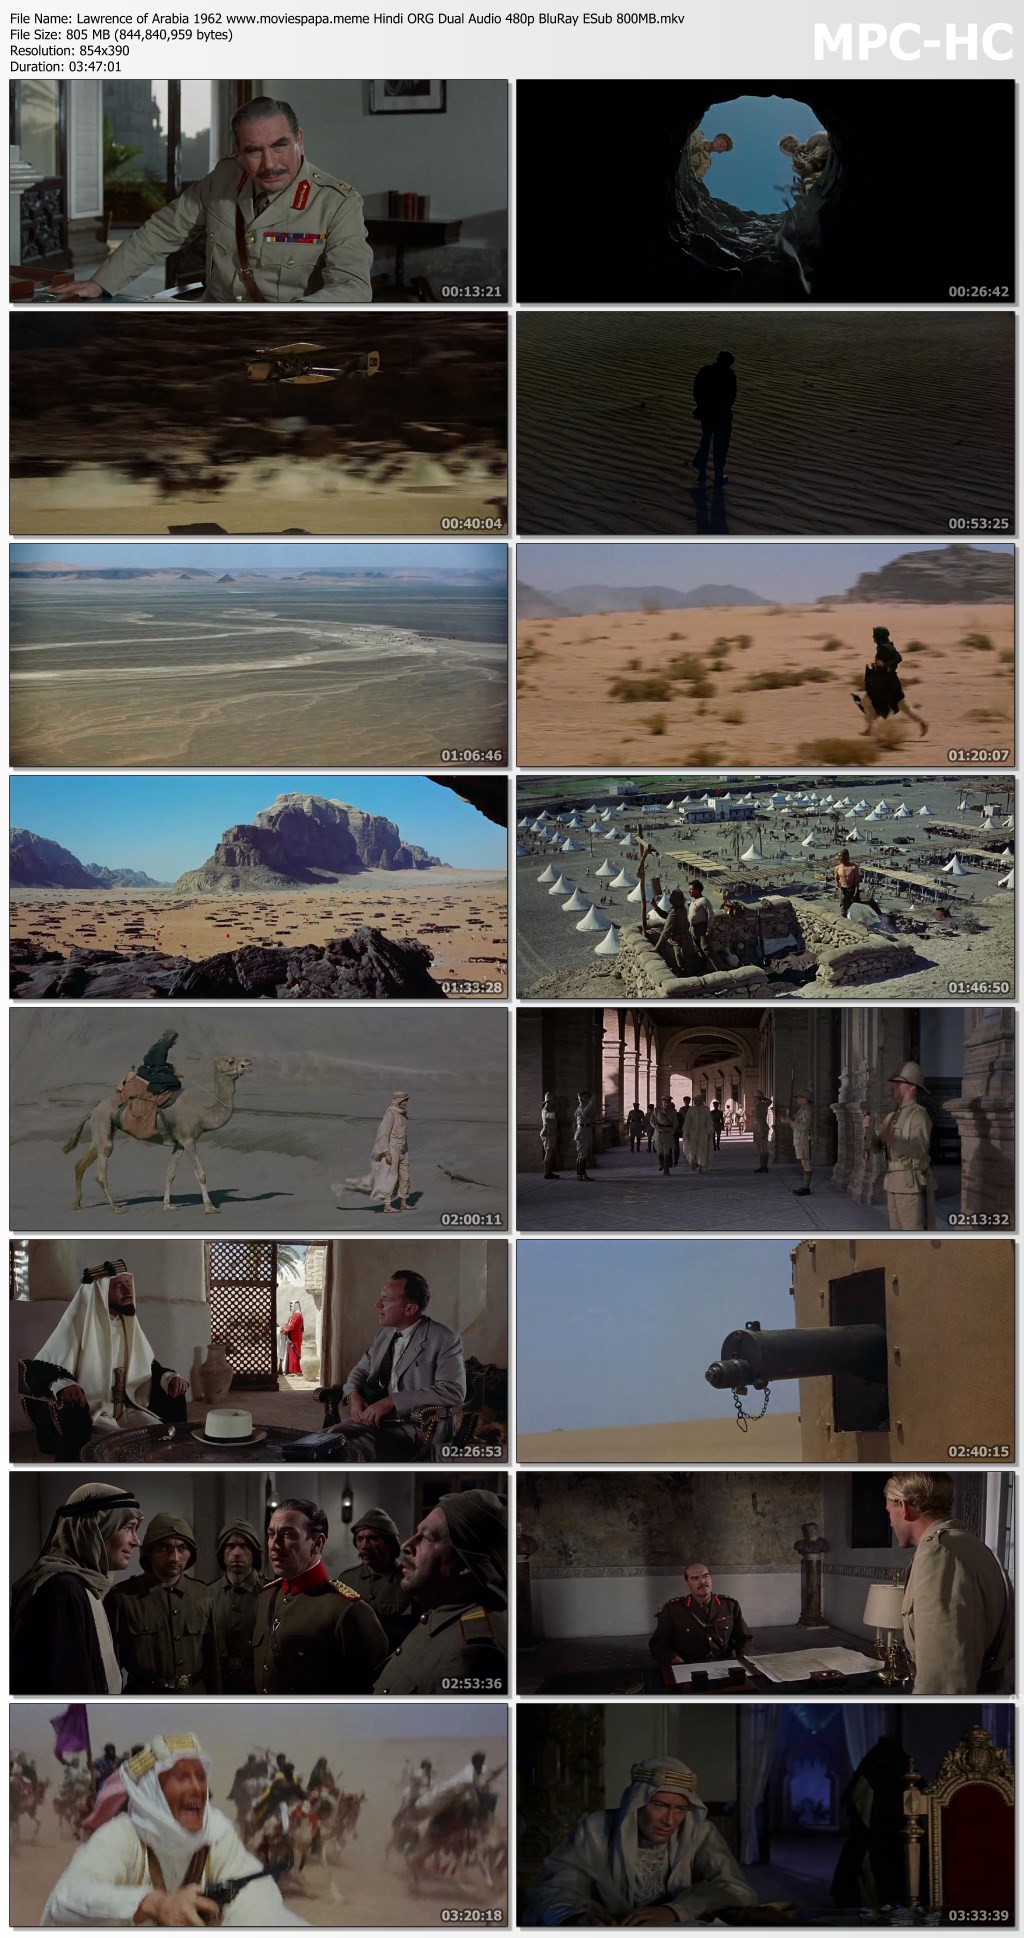 Lawrence of Arabia 1962 www.moviespapa.meme Hindi ORG Dual Audio 480p BluRay ESub 800MB.mkv thumbs